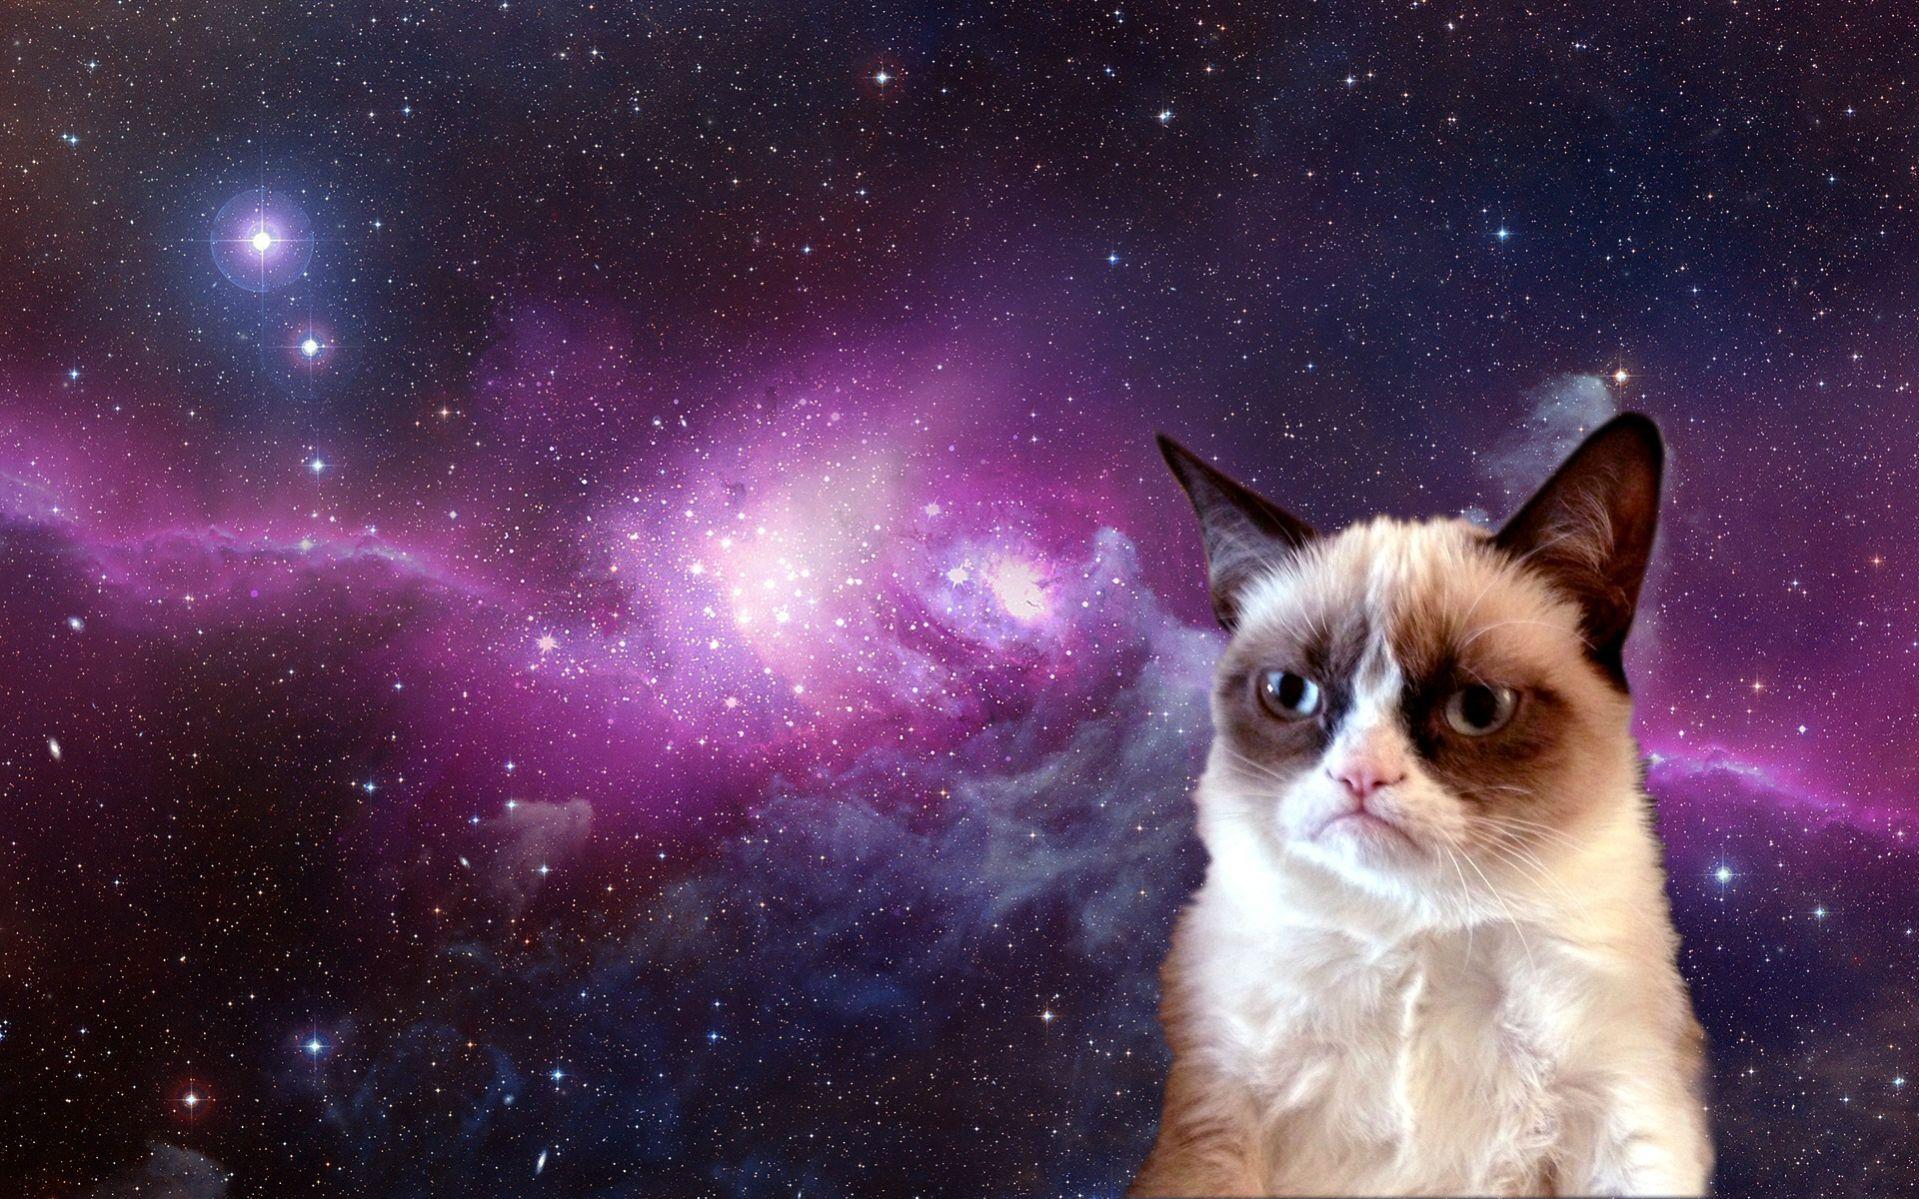 Grumpy Cat in Space [1920x1200]. Cat wallpaper, Grumpy cat humor, Grumpy cat meme